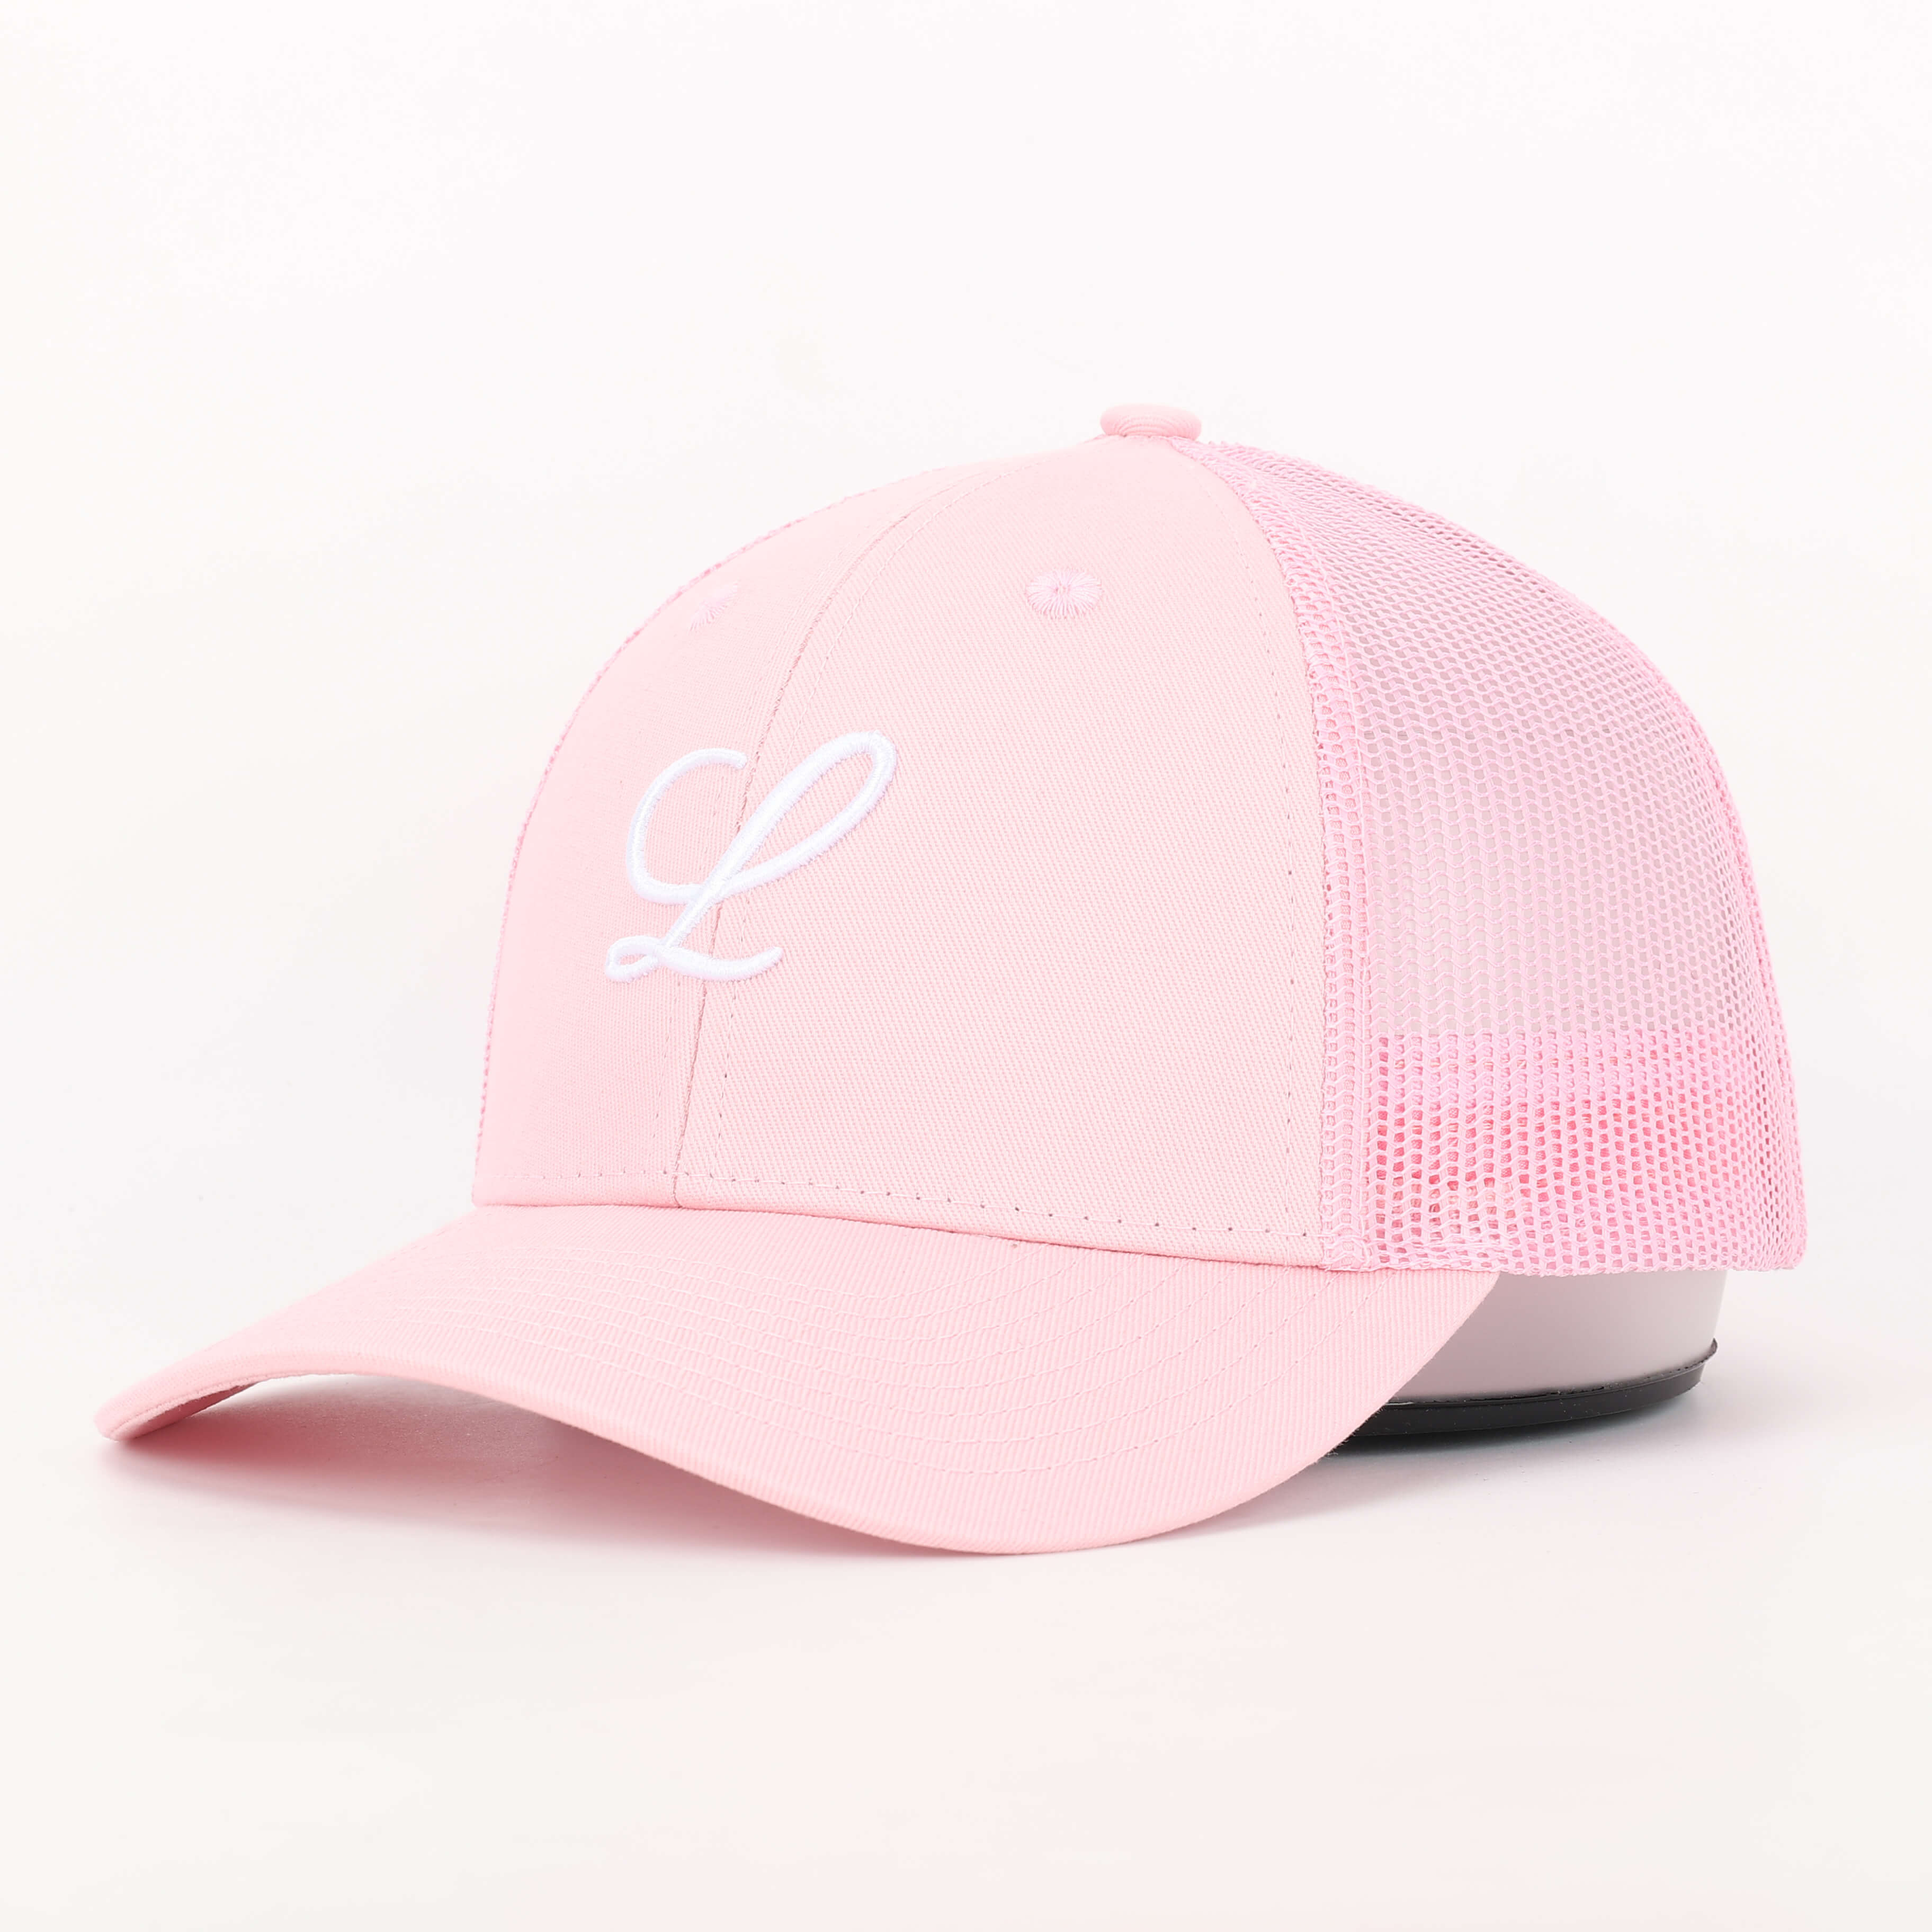 Pink Mesh Cap